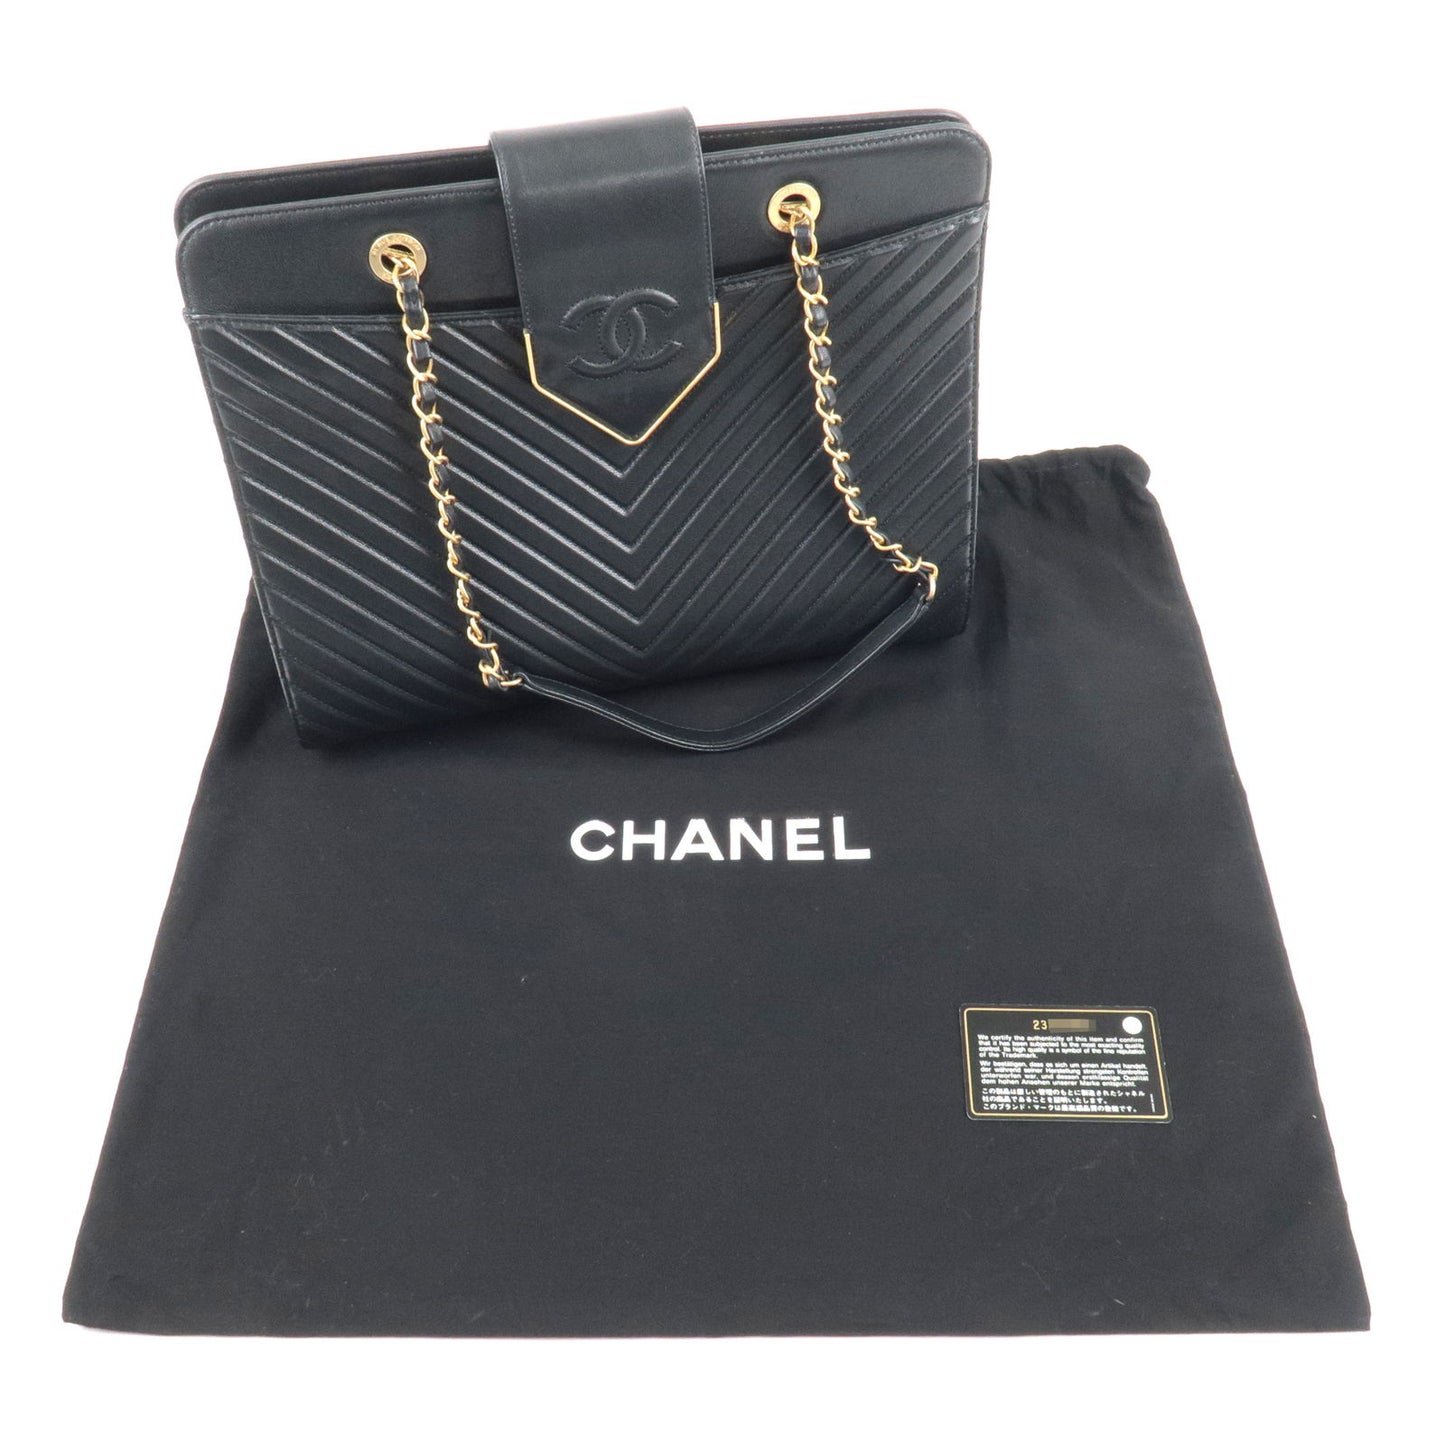 CHANEL V Stitch Calf Skin Leather Chain Tote Bag Black Gold